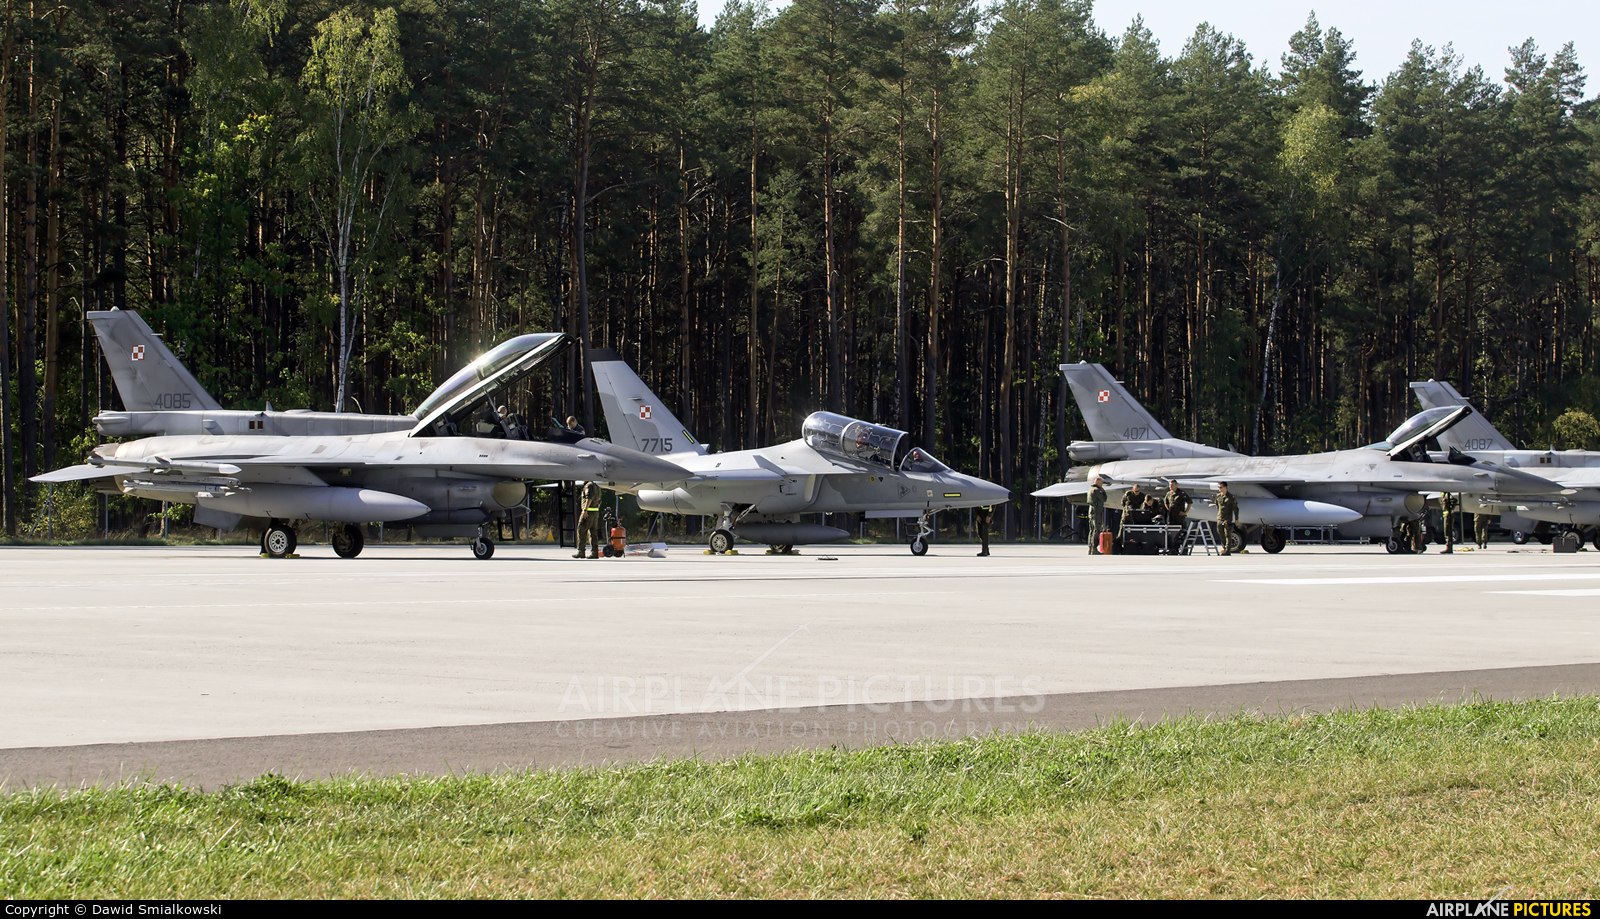 Poland - Air Force 4085 aircraft at Off Airport - Poland